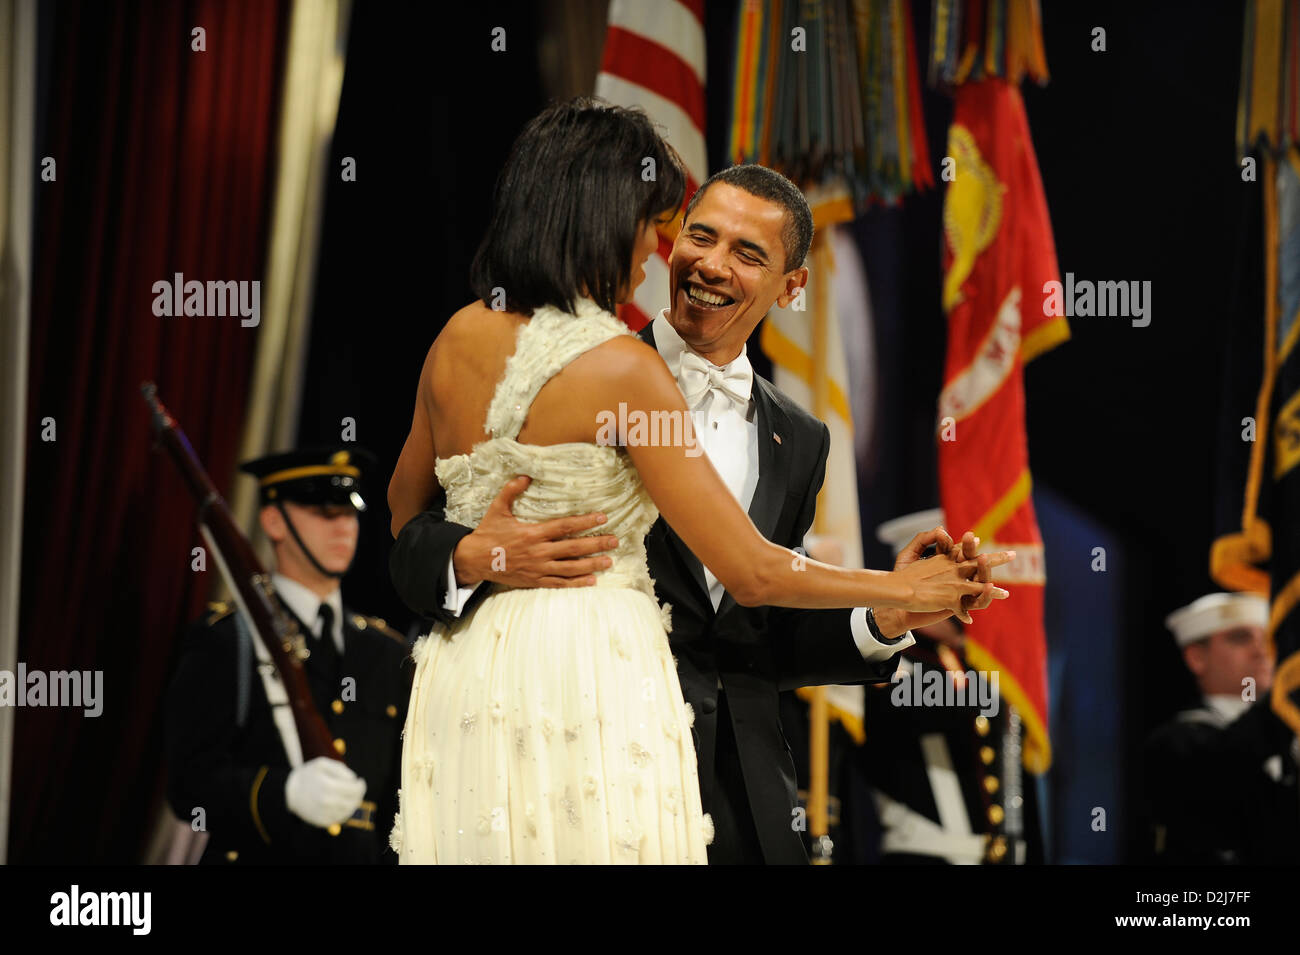 Präsident Barack Obama und First Lady Michelle Obama Tanz auf dem Mid-Atlantic-Ball in Washington, DC 20. Januar 2009. Stockfoto